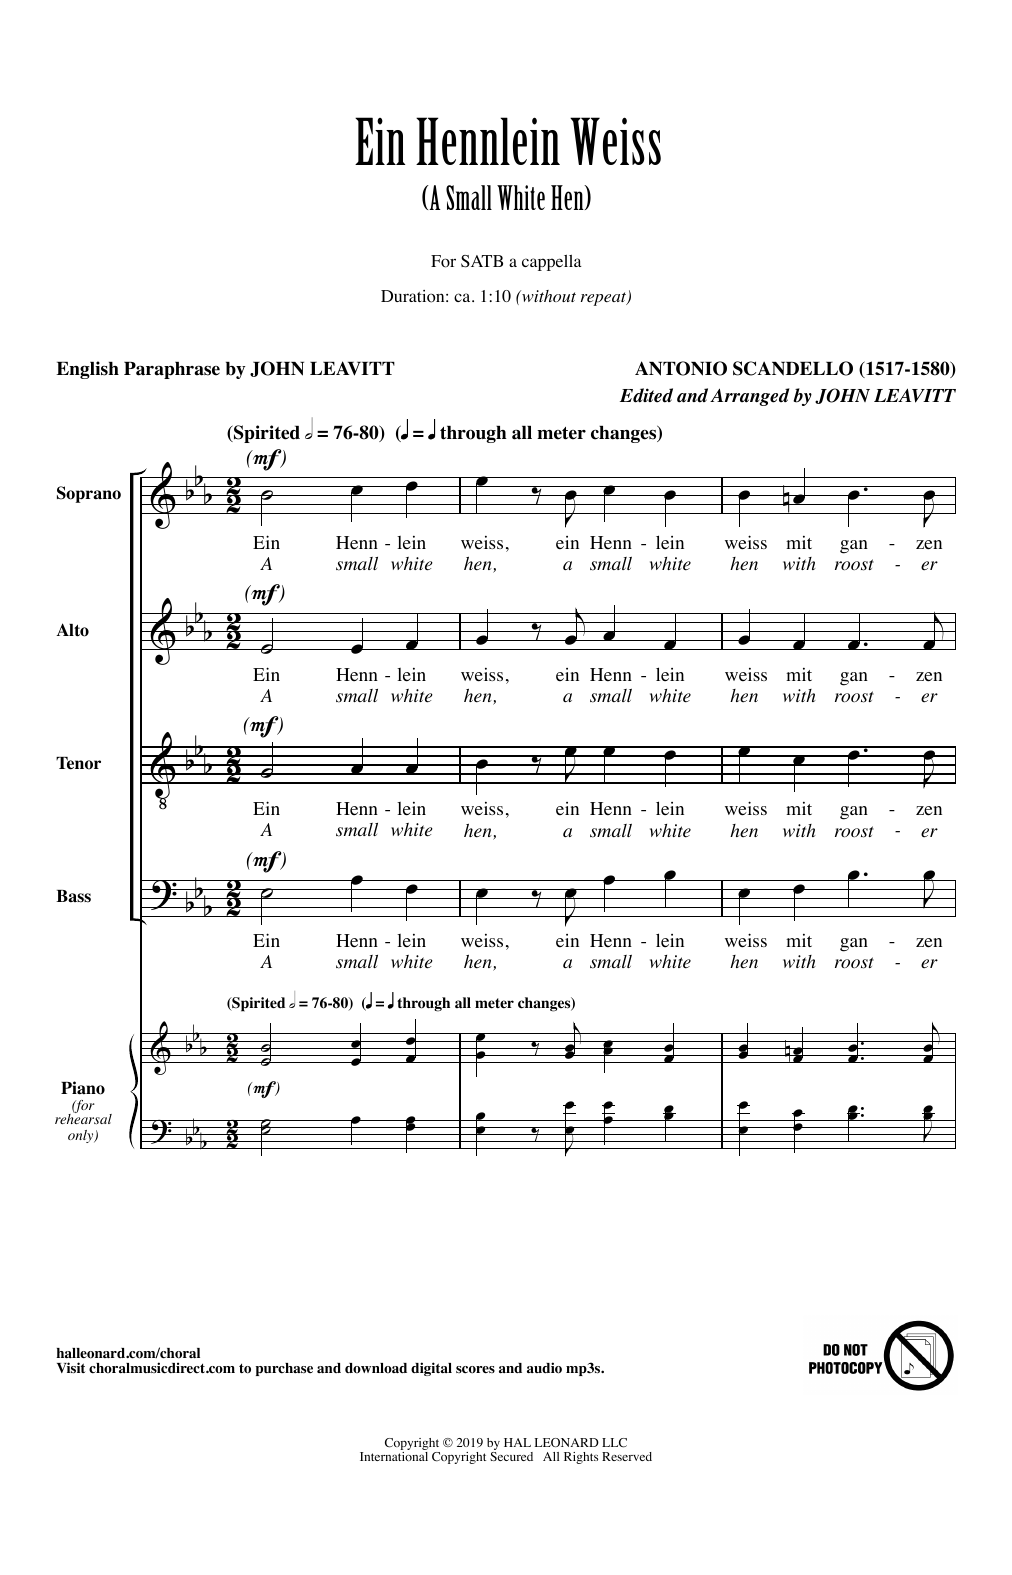 Download Antonio Scandello Ein Hennlein Weiss (arr. John Leavitt) Sheet Music and learn how to play SATB Choir PDF digital score in minutes